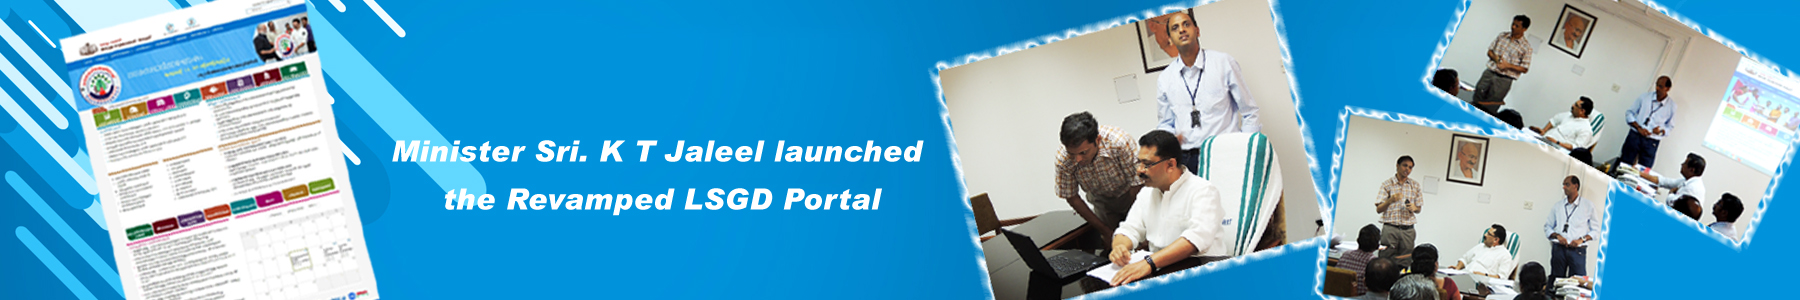 web-portal-launching